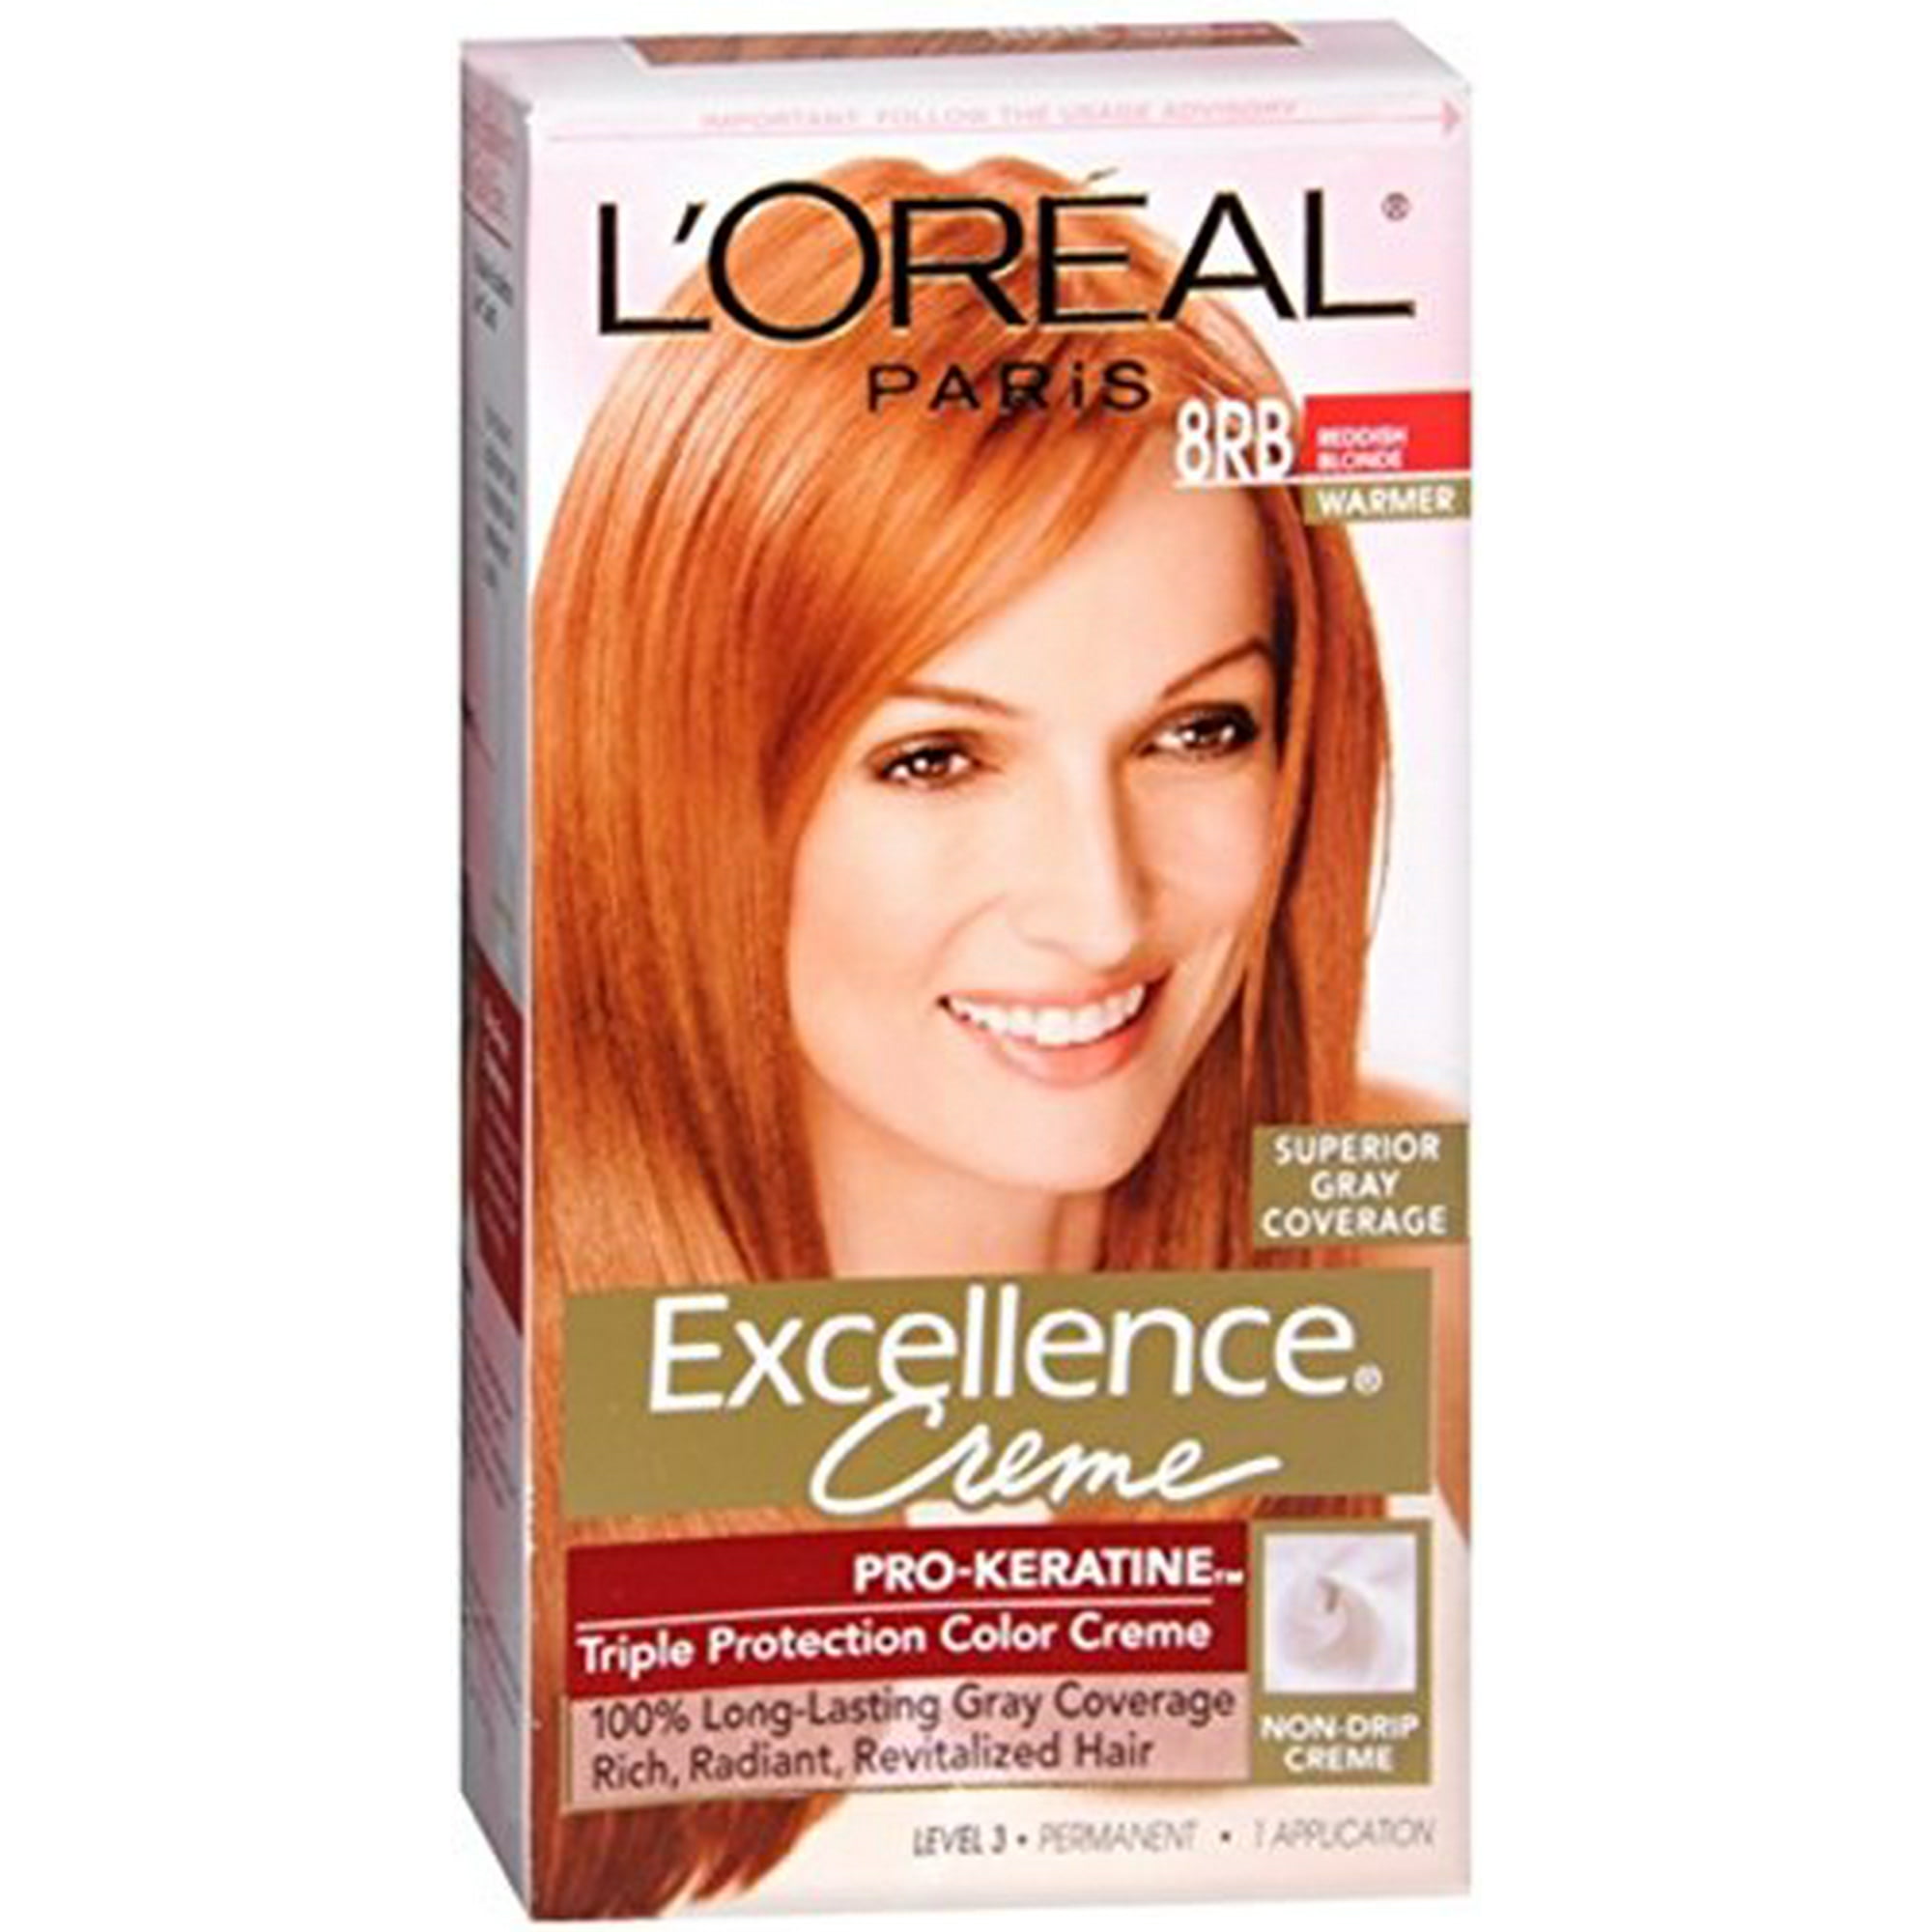 LOreal Paris Excellence Creme Permanent Hair Color, 8RB Medium Reddish  Blonde, 100 percent Gray Coverage Hair Dye, Pack of 1 | Walmart Canada